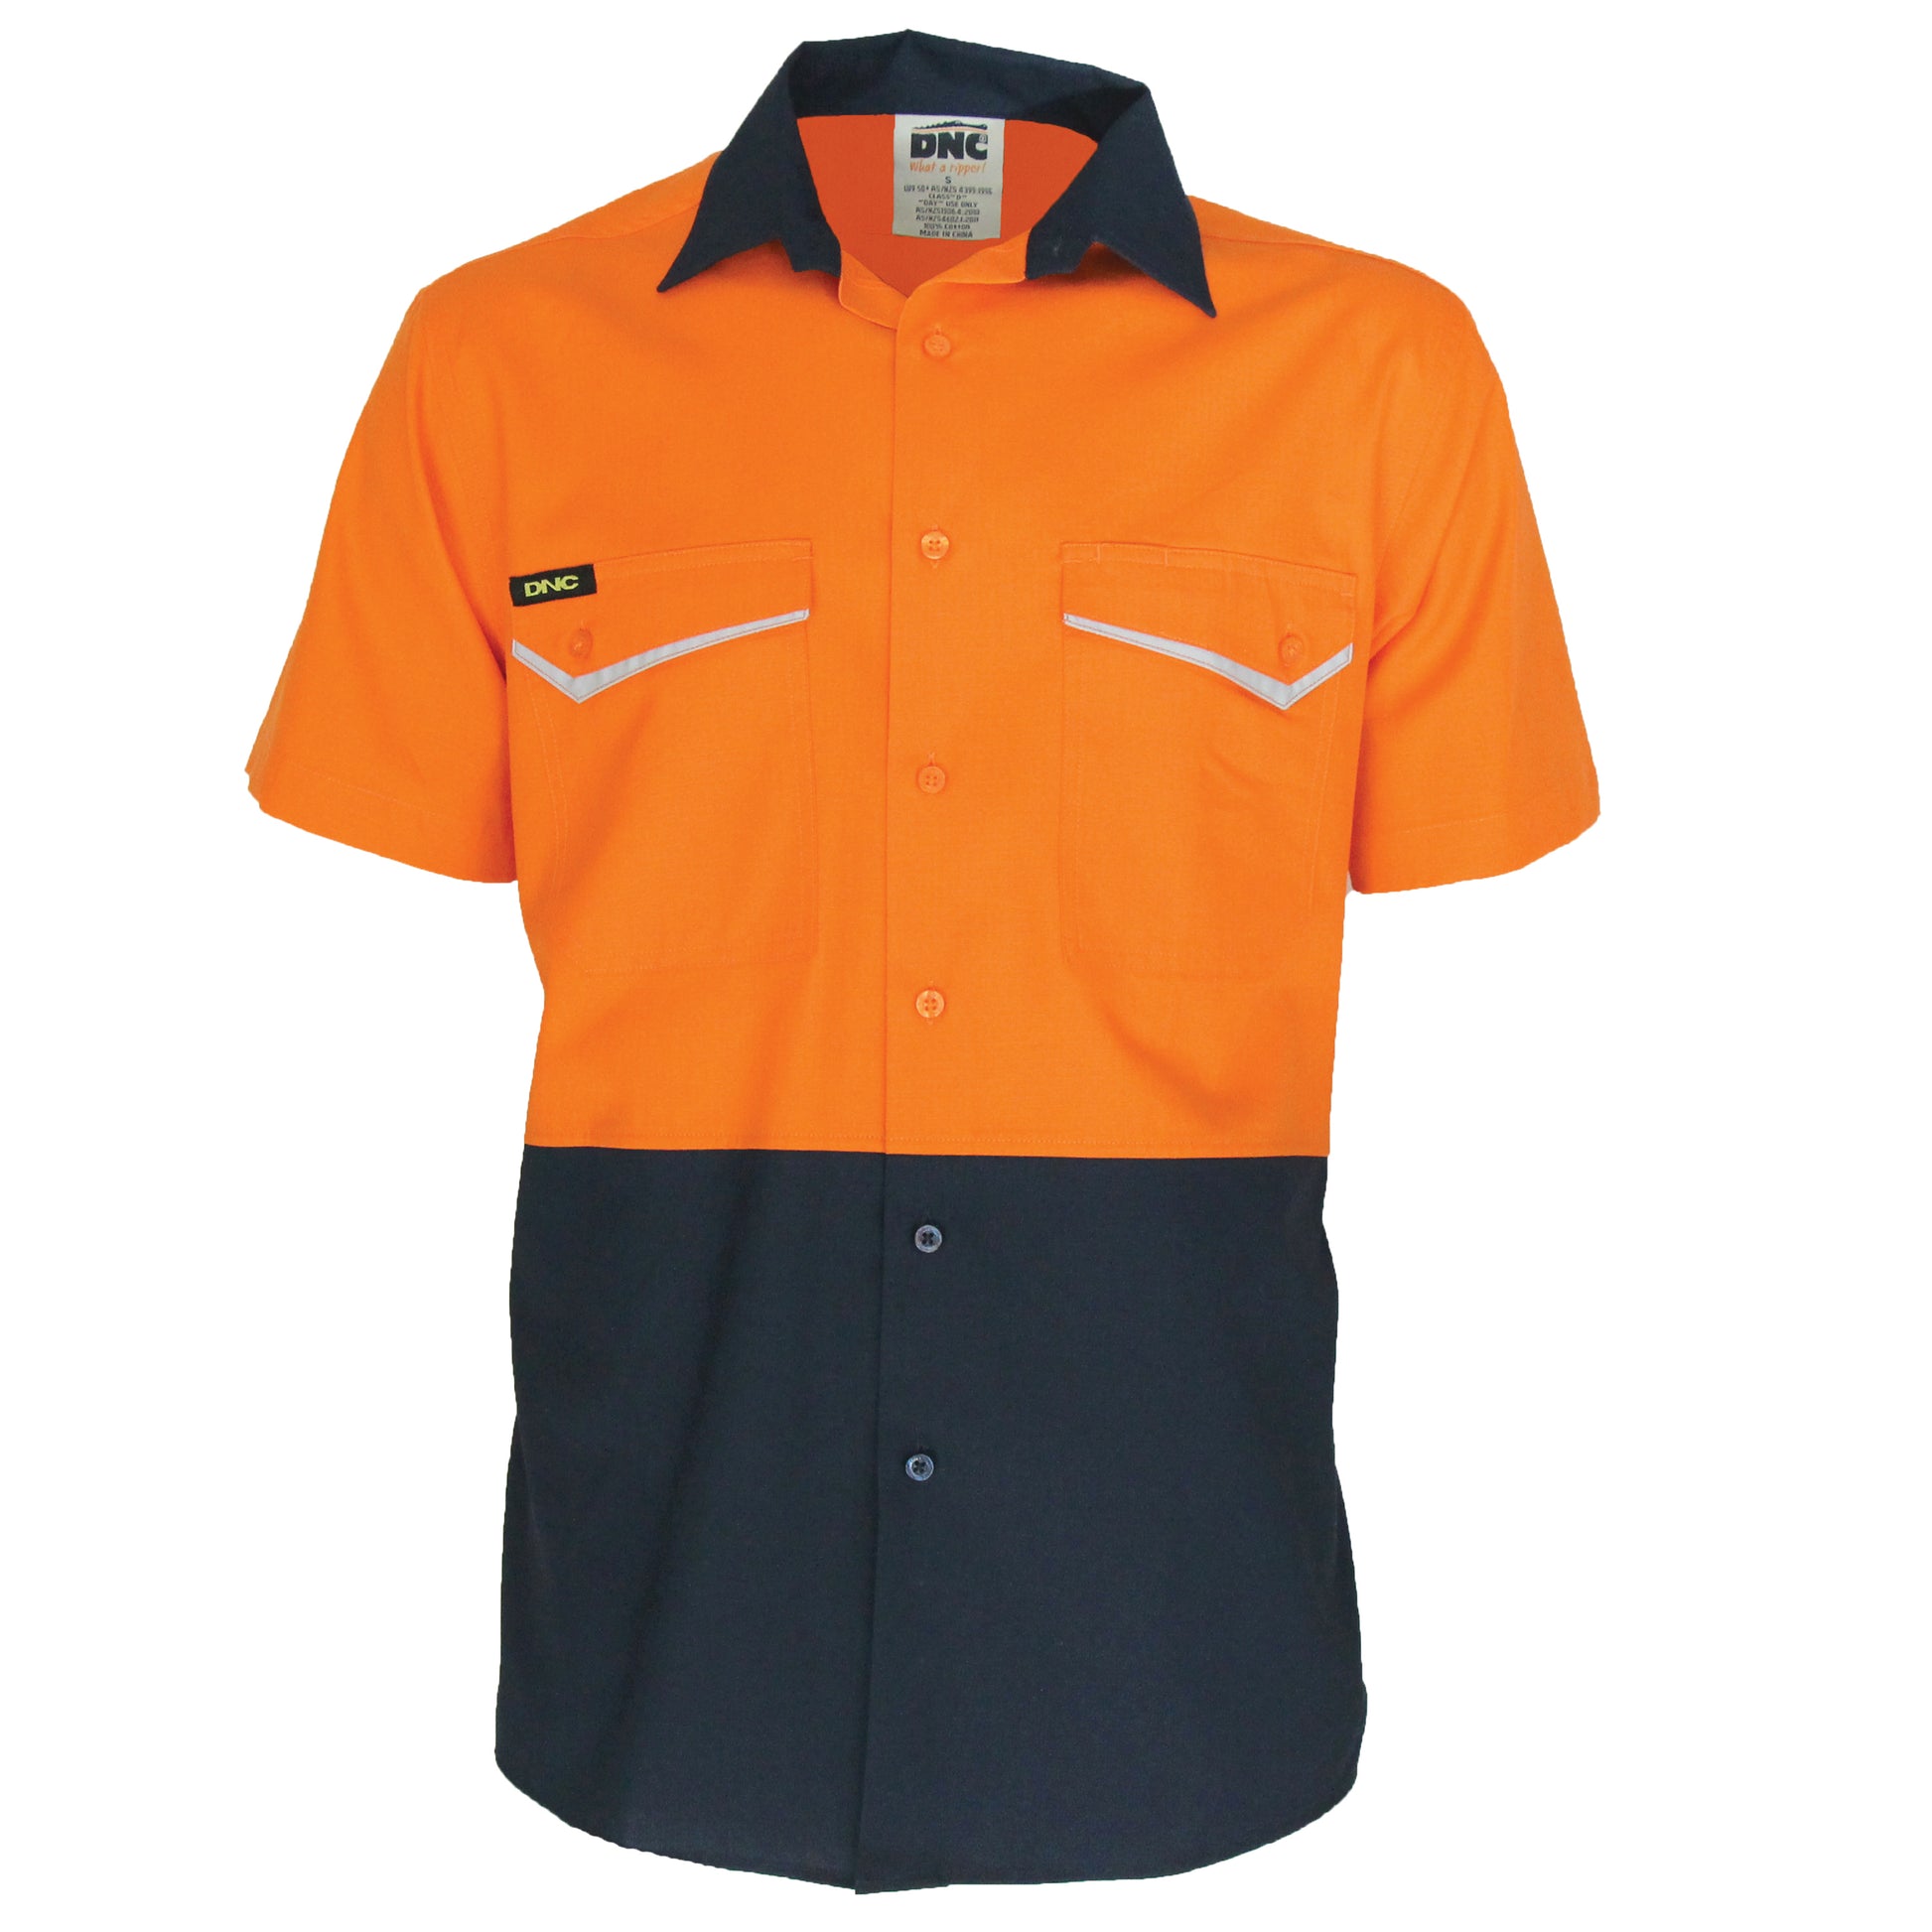 DNC Two-Tone RipStop Cotton Cool Shirt, S/S 3585 - Star Uniforms Australia